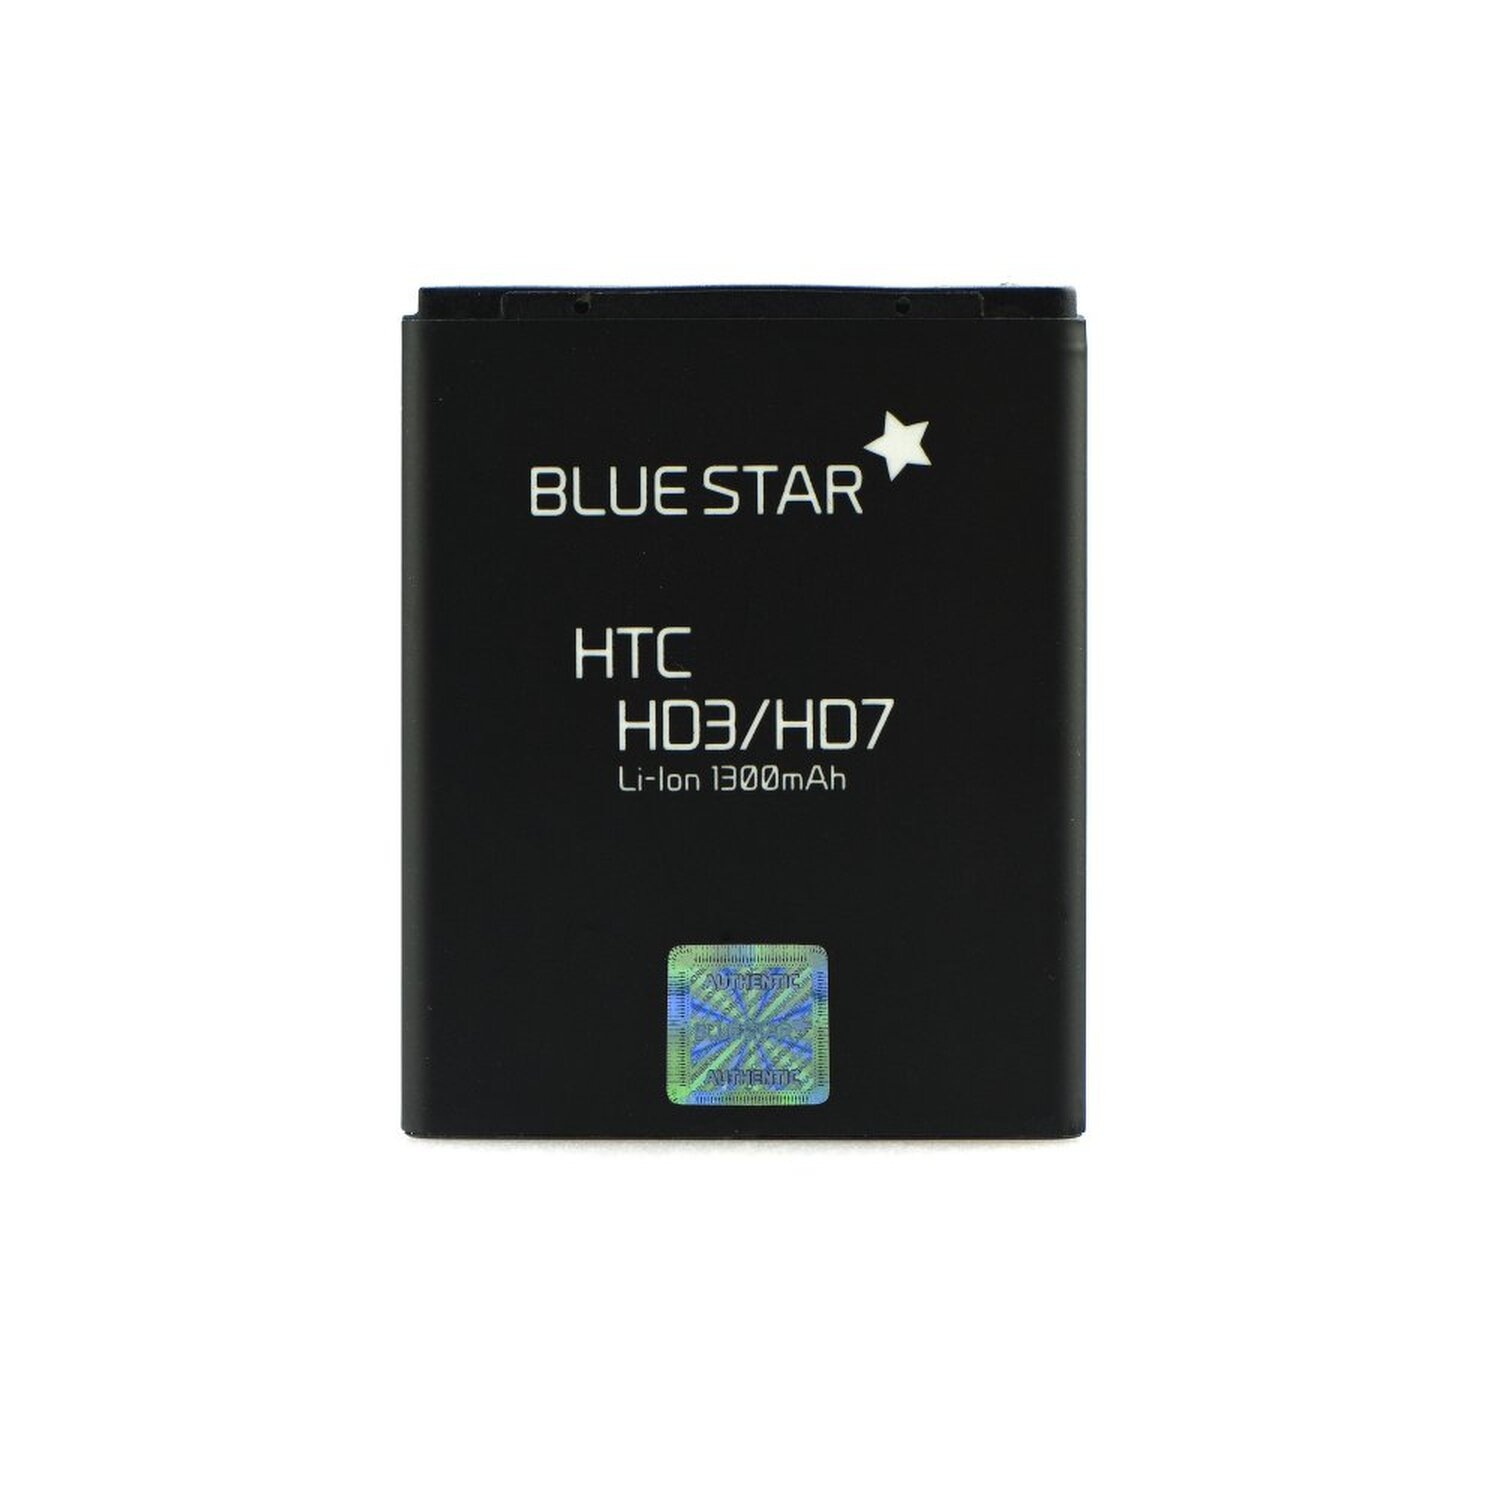 BLUESTAR Akku für HTC Li-Ion S / HD7 / HD3 / G13 Handyakku / Explorer Wildfire